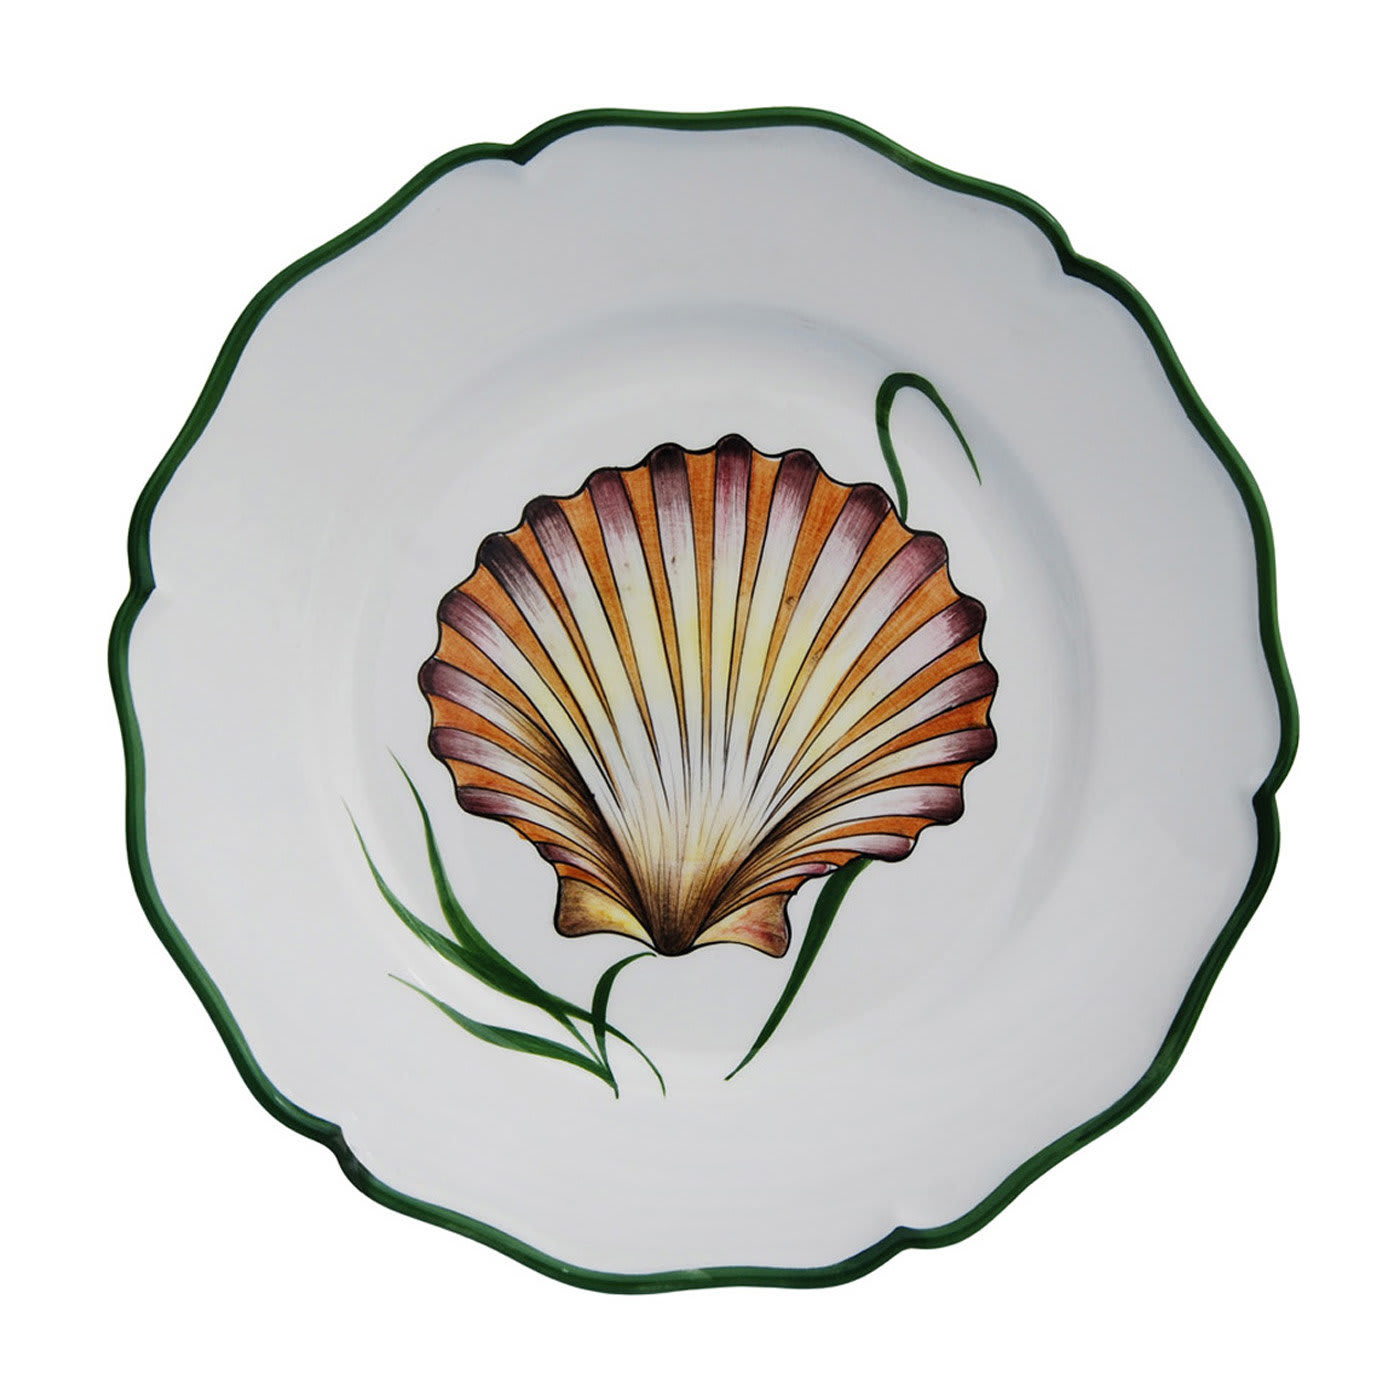 Set of 4 Game of Shells Ceramic Dinner Plates - Este Ceramiche